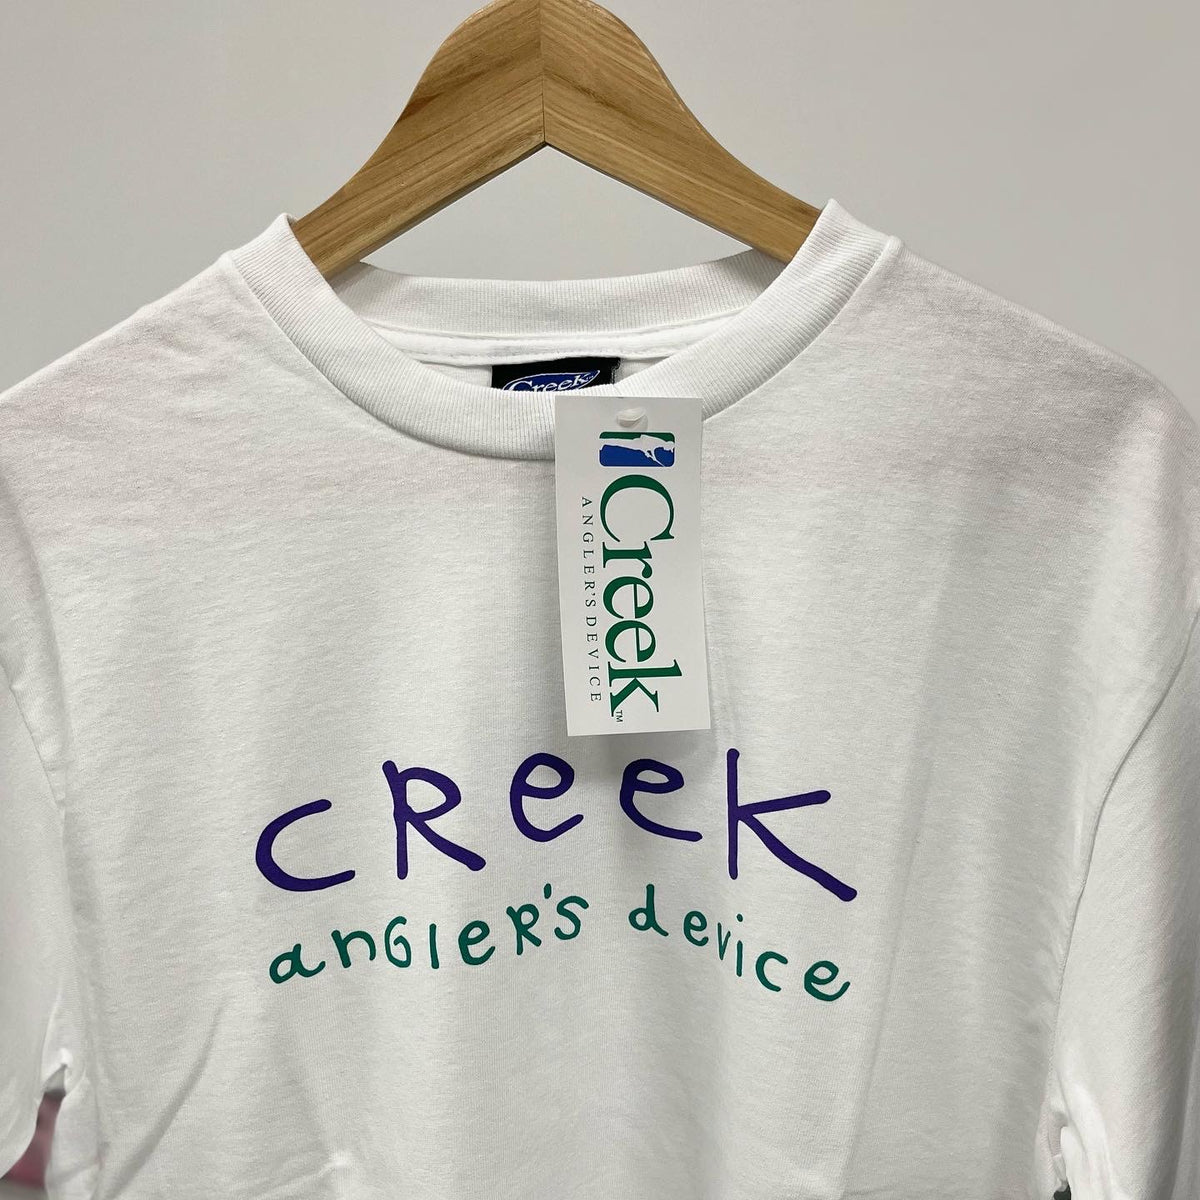 Creek Angler's Device T-shirt